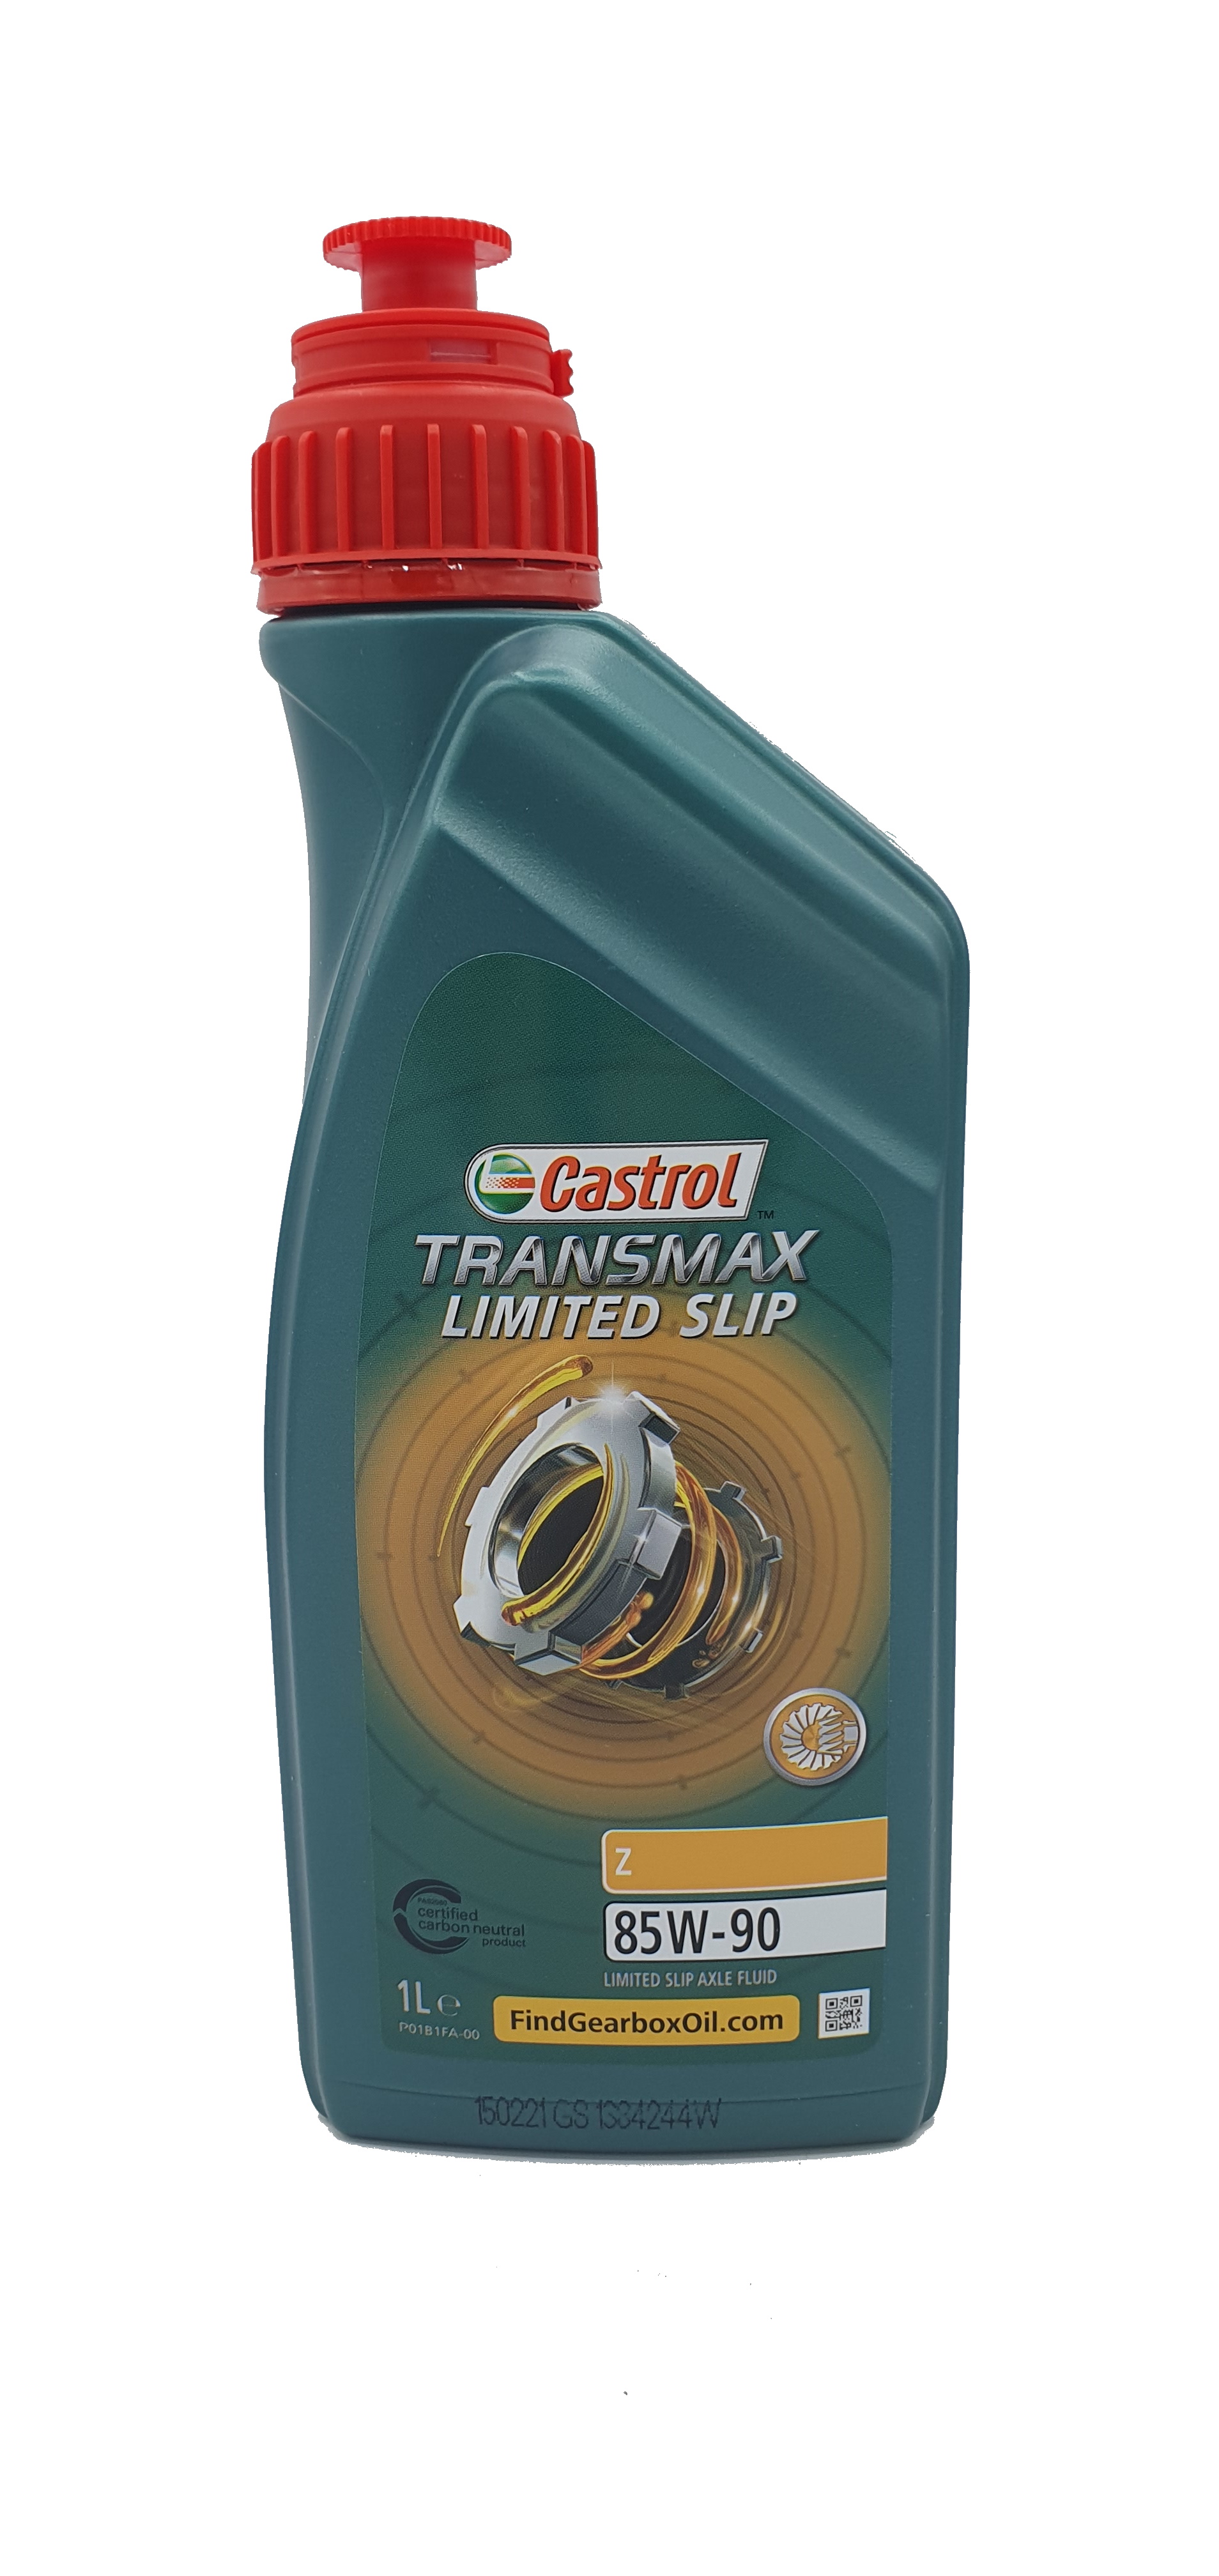 Castrol Transmax Limited Slip Z 85W-90 1 Liter